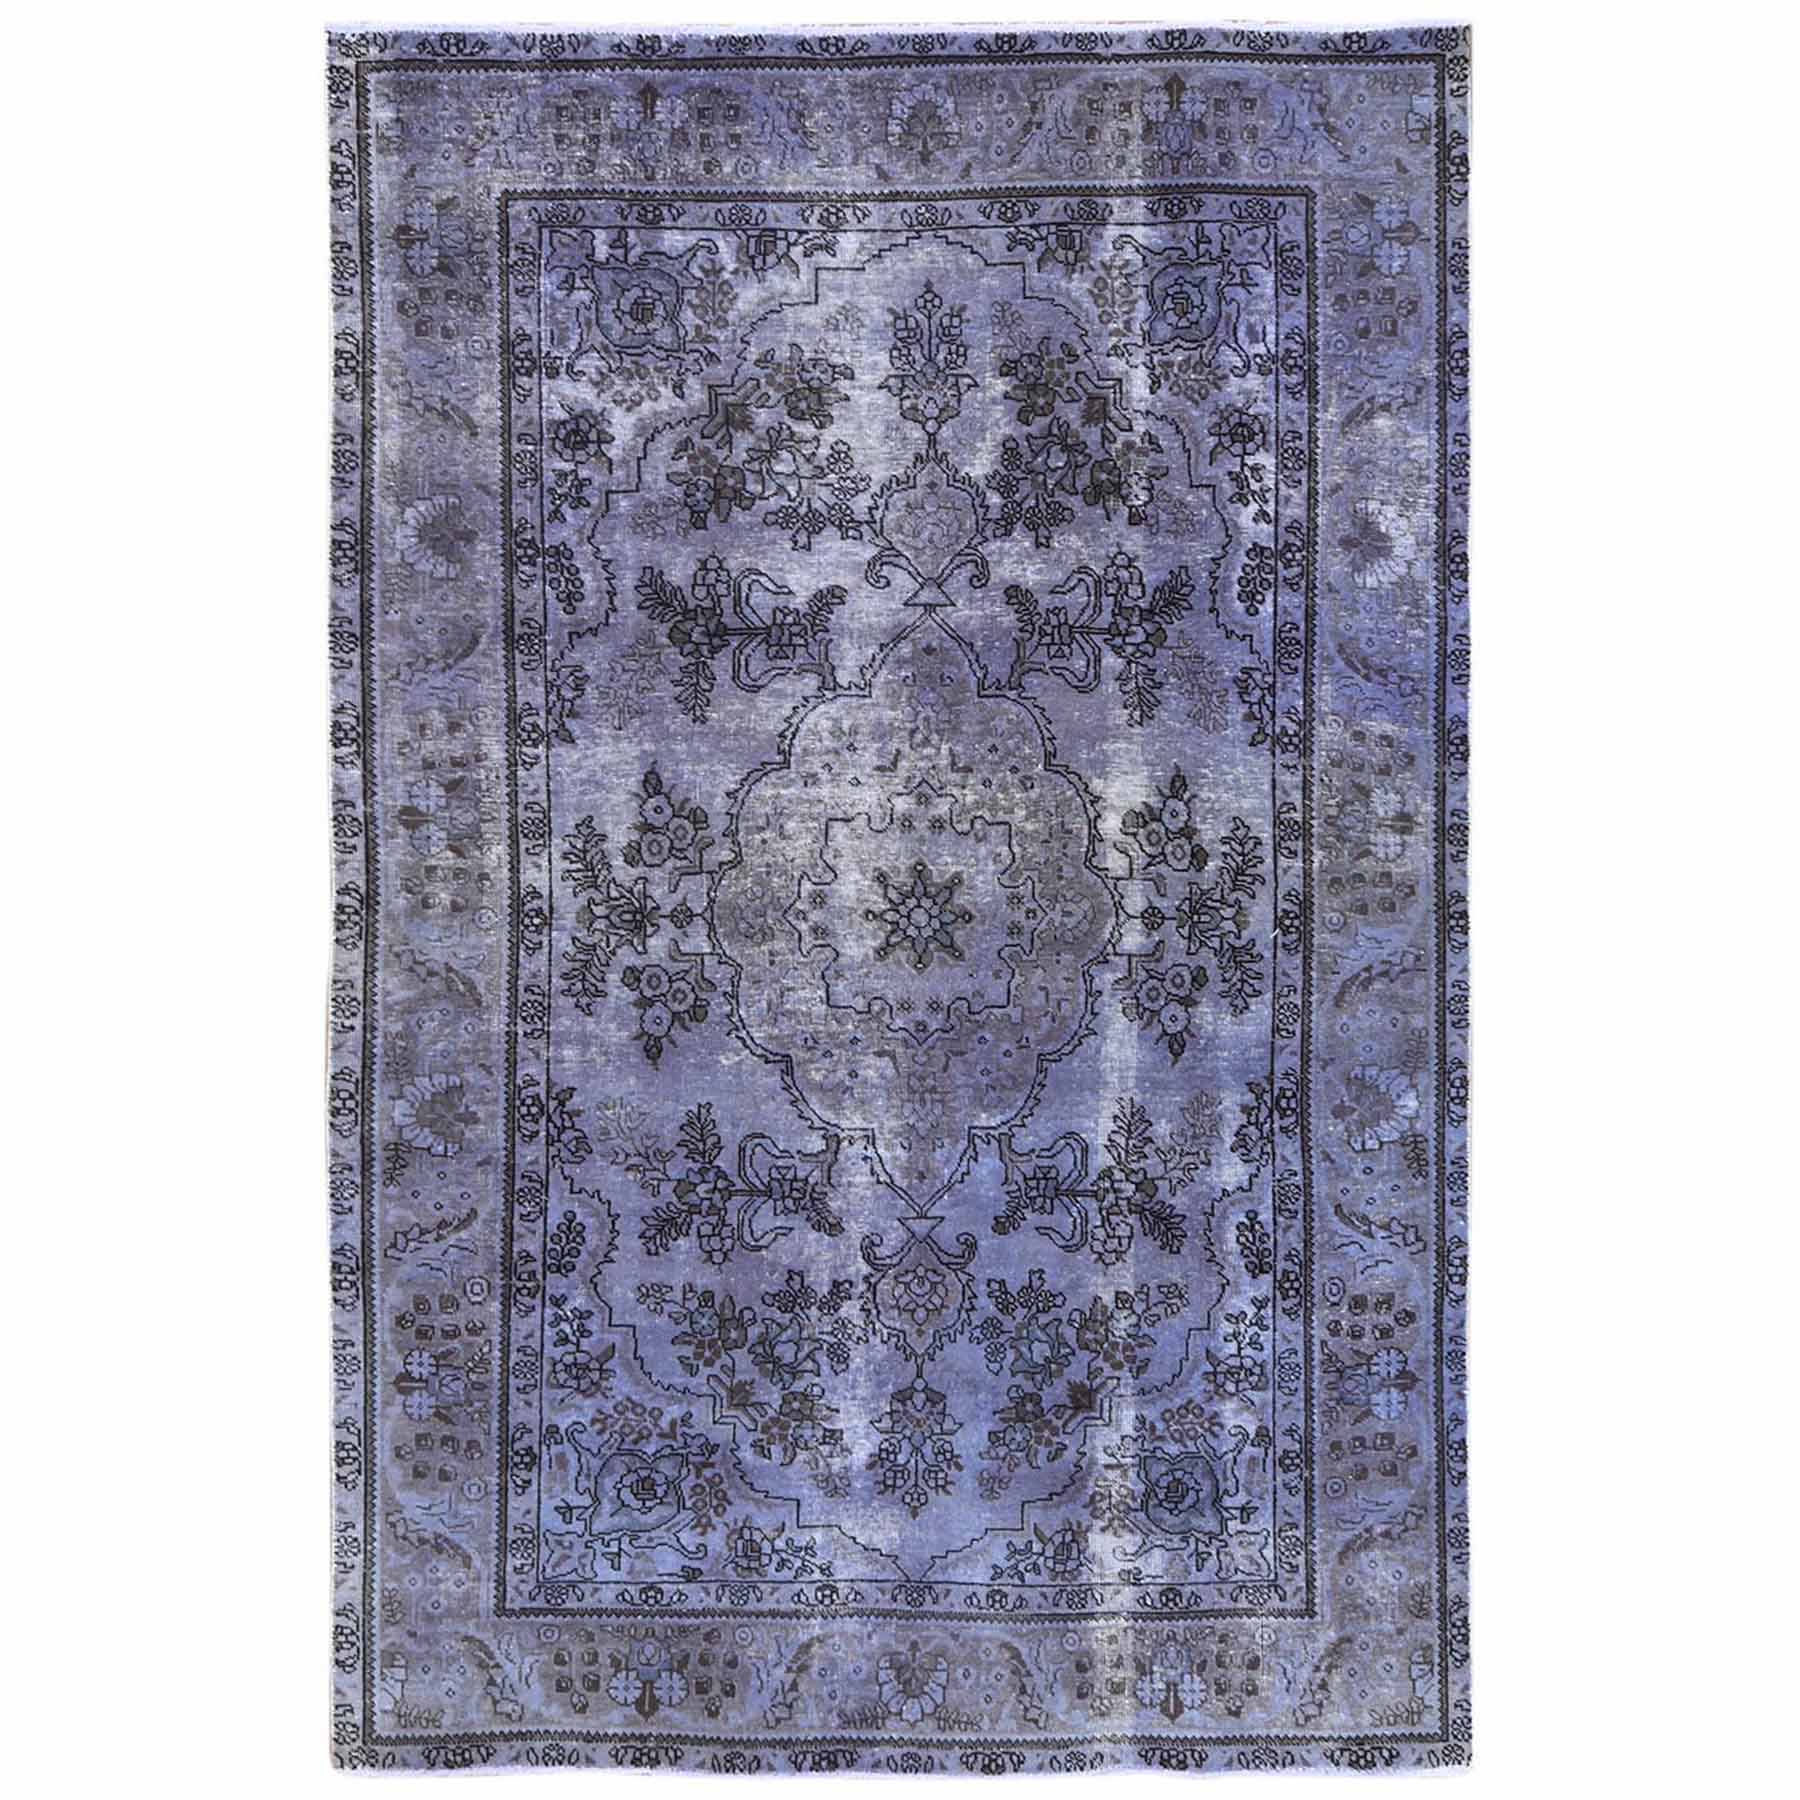 Oriental Rugs Purple Medallion Floor Cover Carpet Mat Thick Pile Decor Luxury 